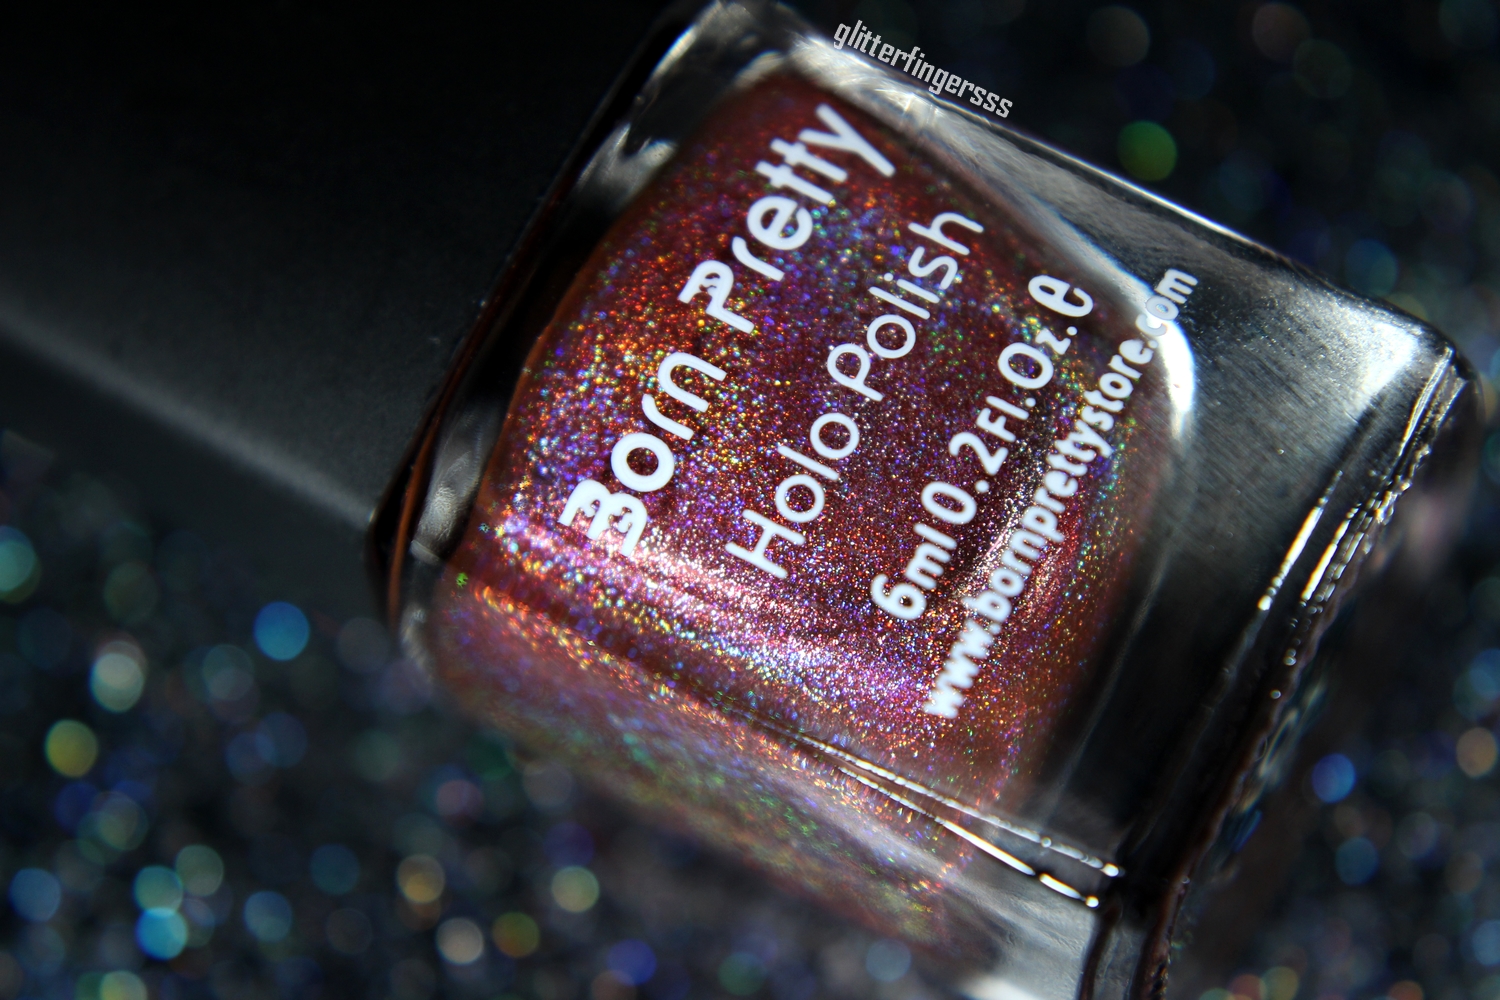 Glitterfingersss in english: Born Pretty Store